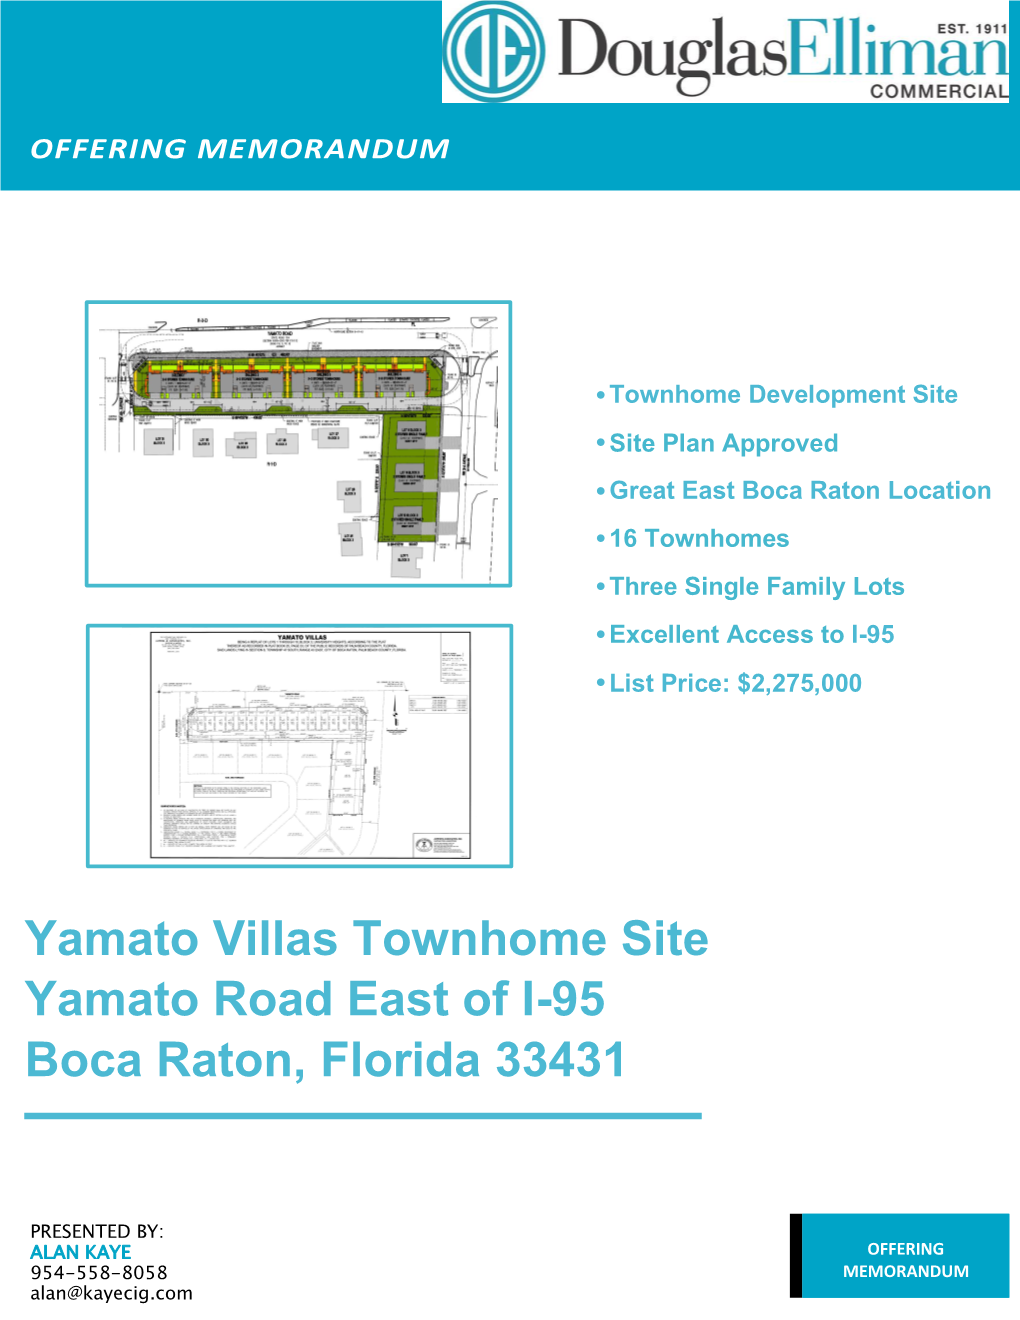 Yamato Villas Townhome Site Yamato Road East of I-95 Boca Raton, Florida 33431